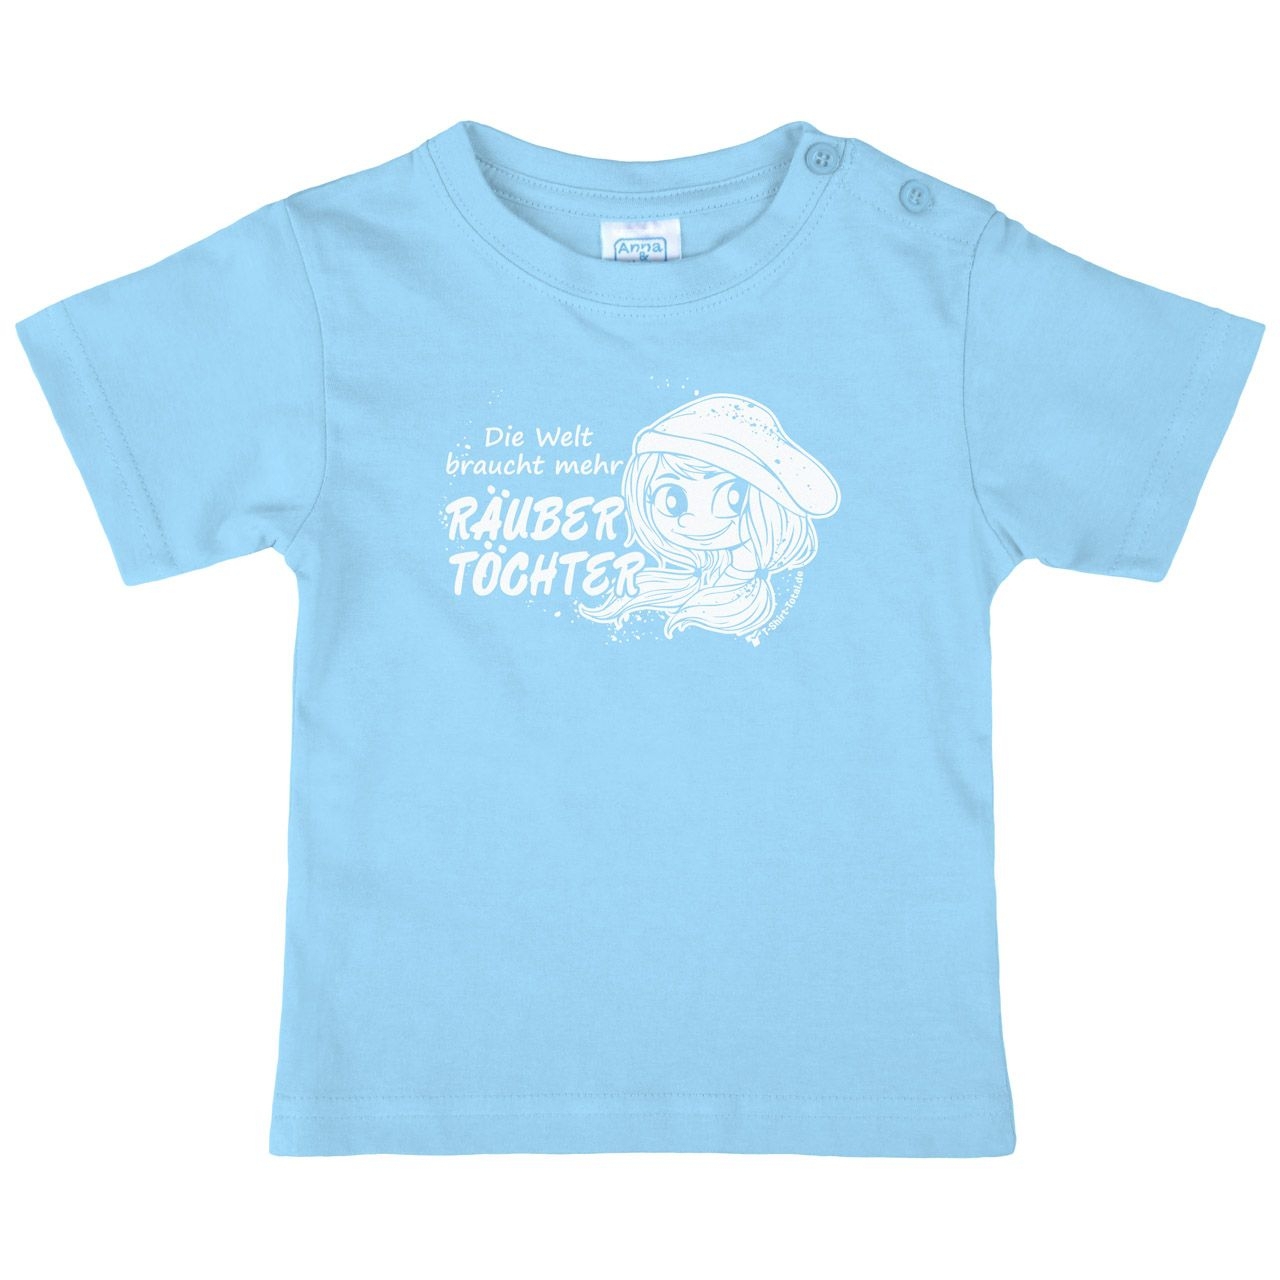 Räubertöchter Kinder T-Shirt hellblau 110 / 116